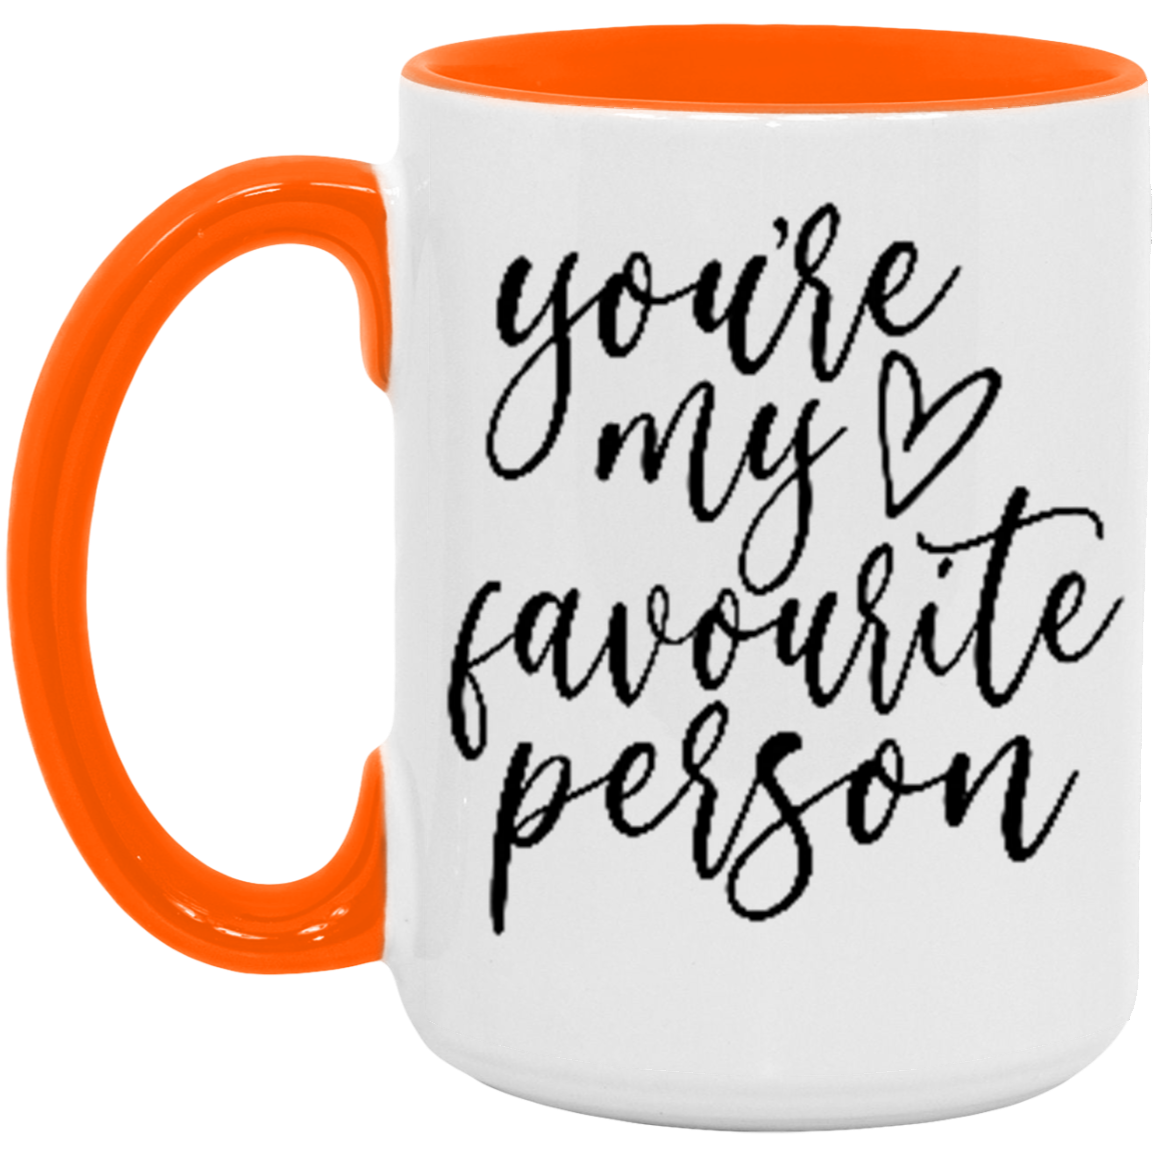 You're My Favourite Person Mug